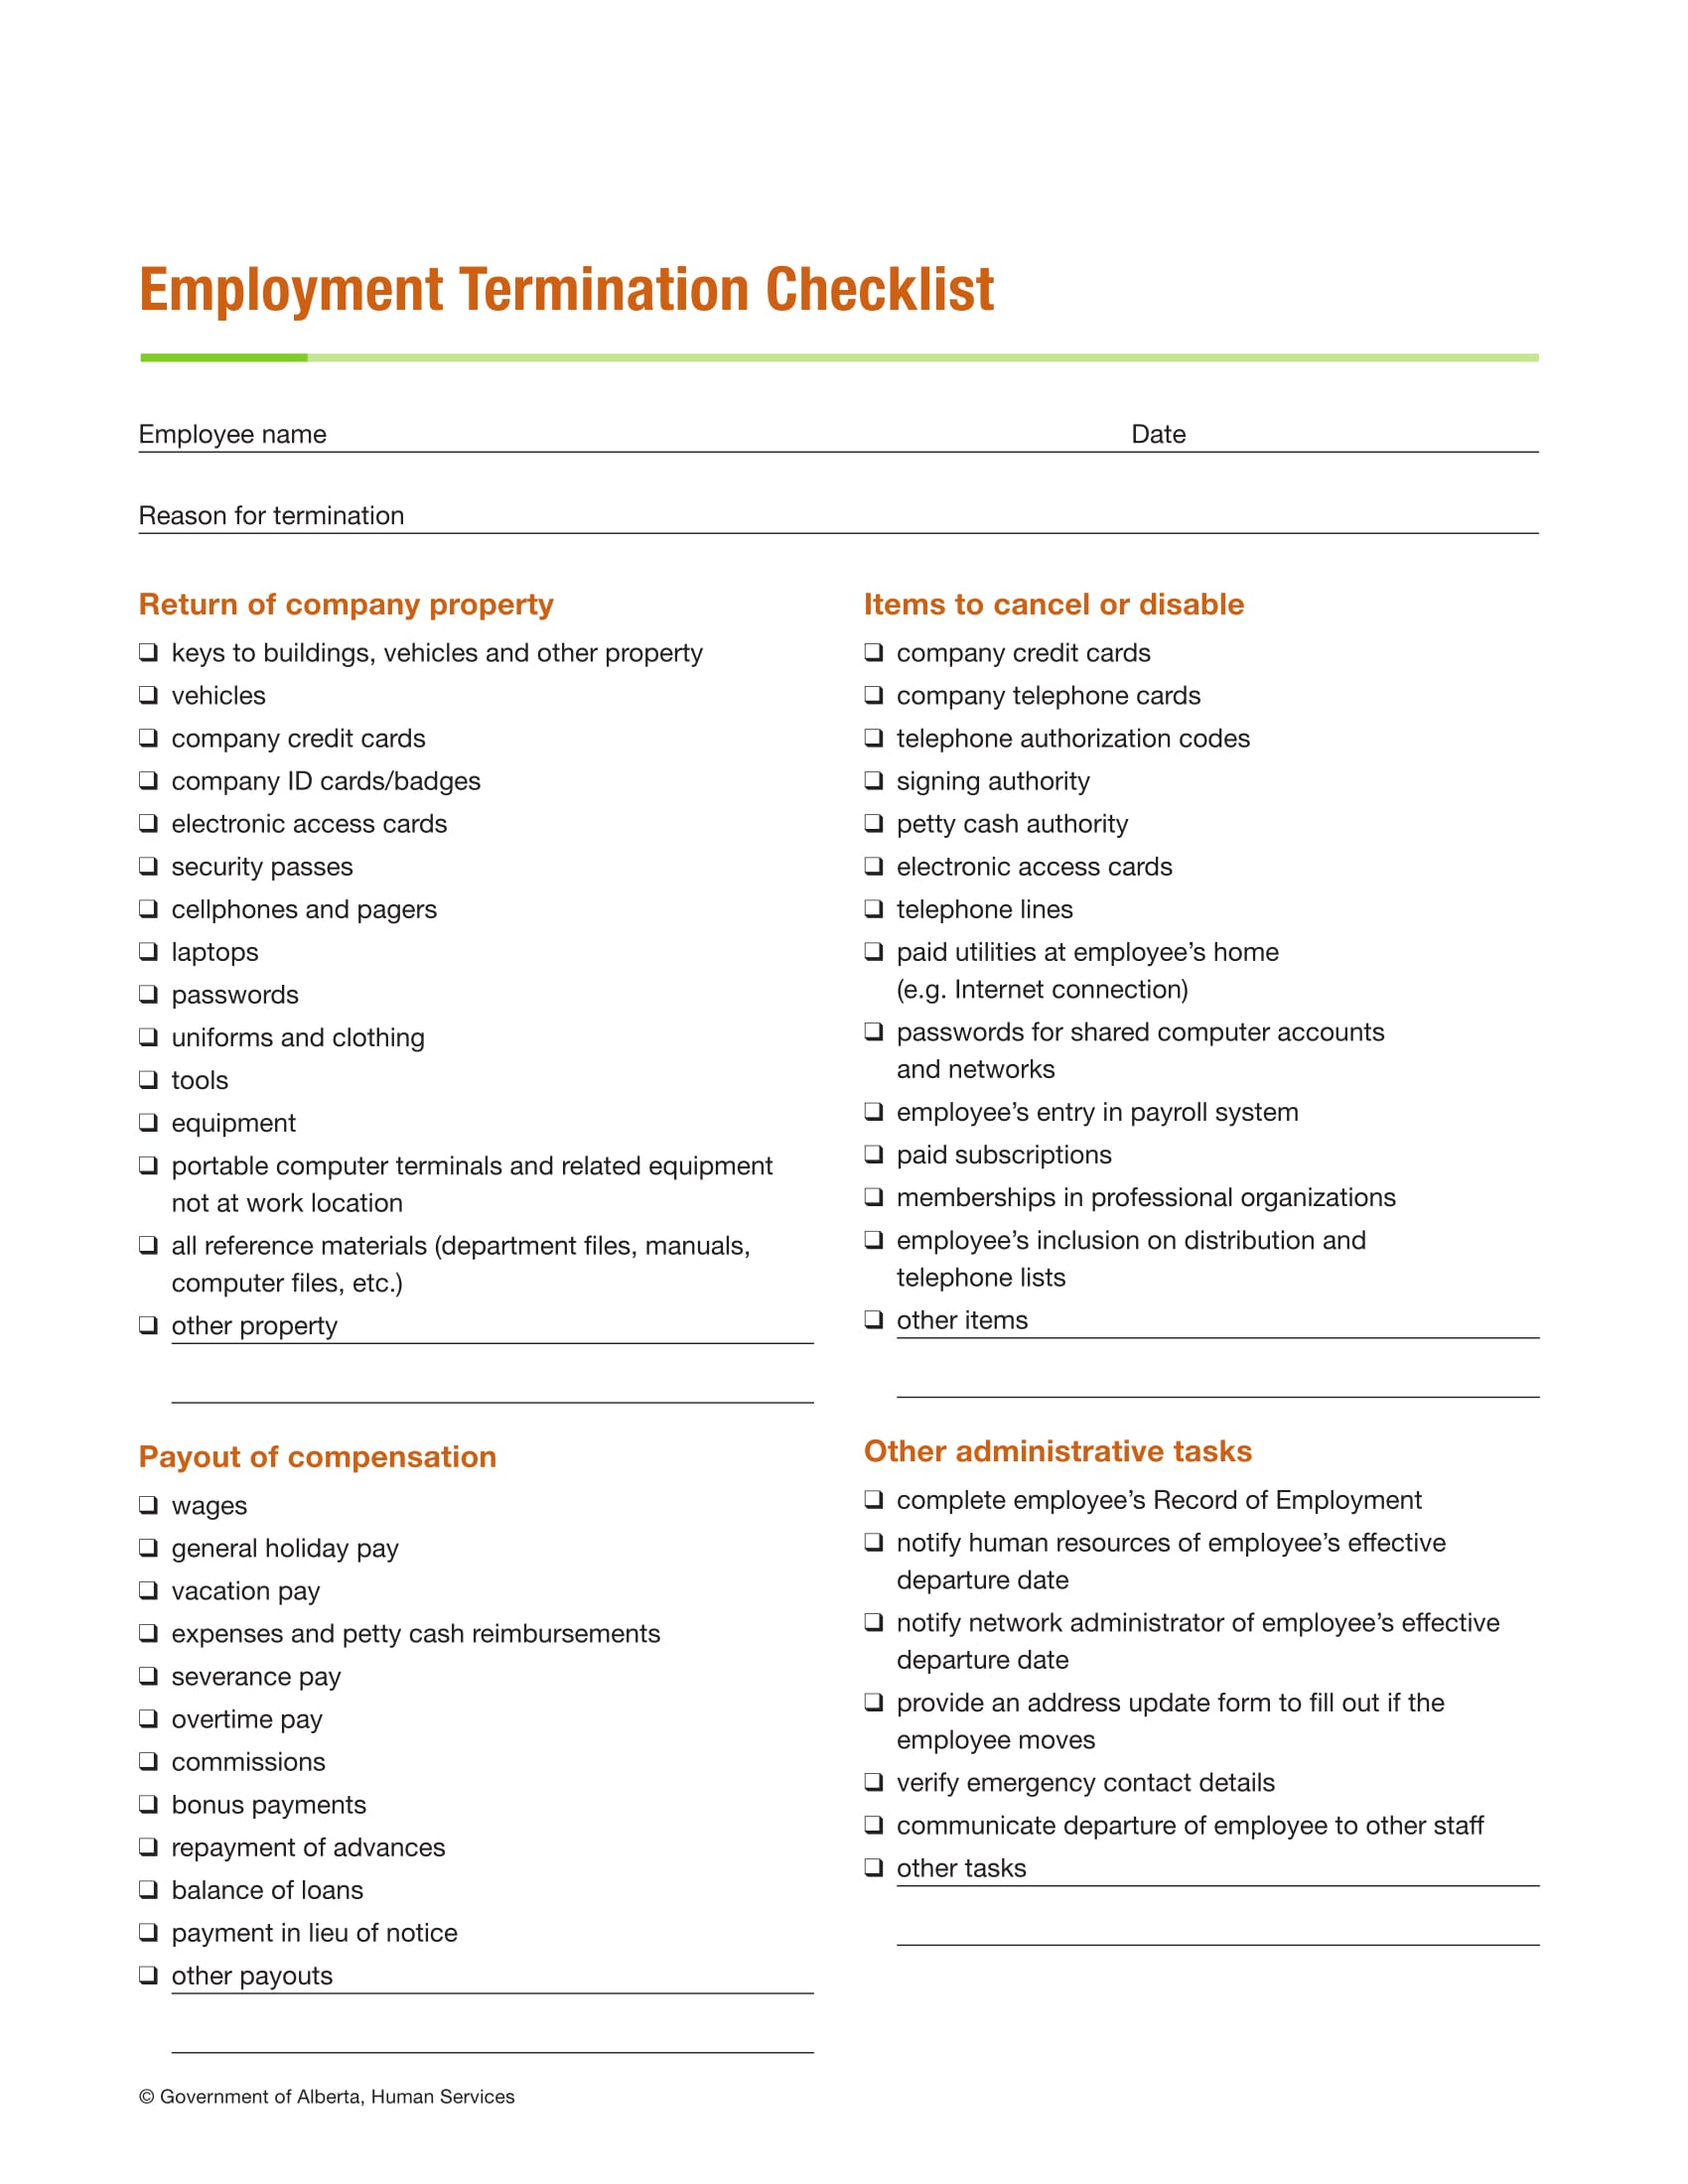 fillable employment termination checklist 1